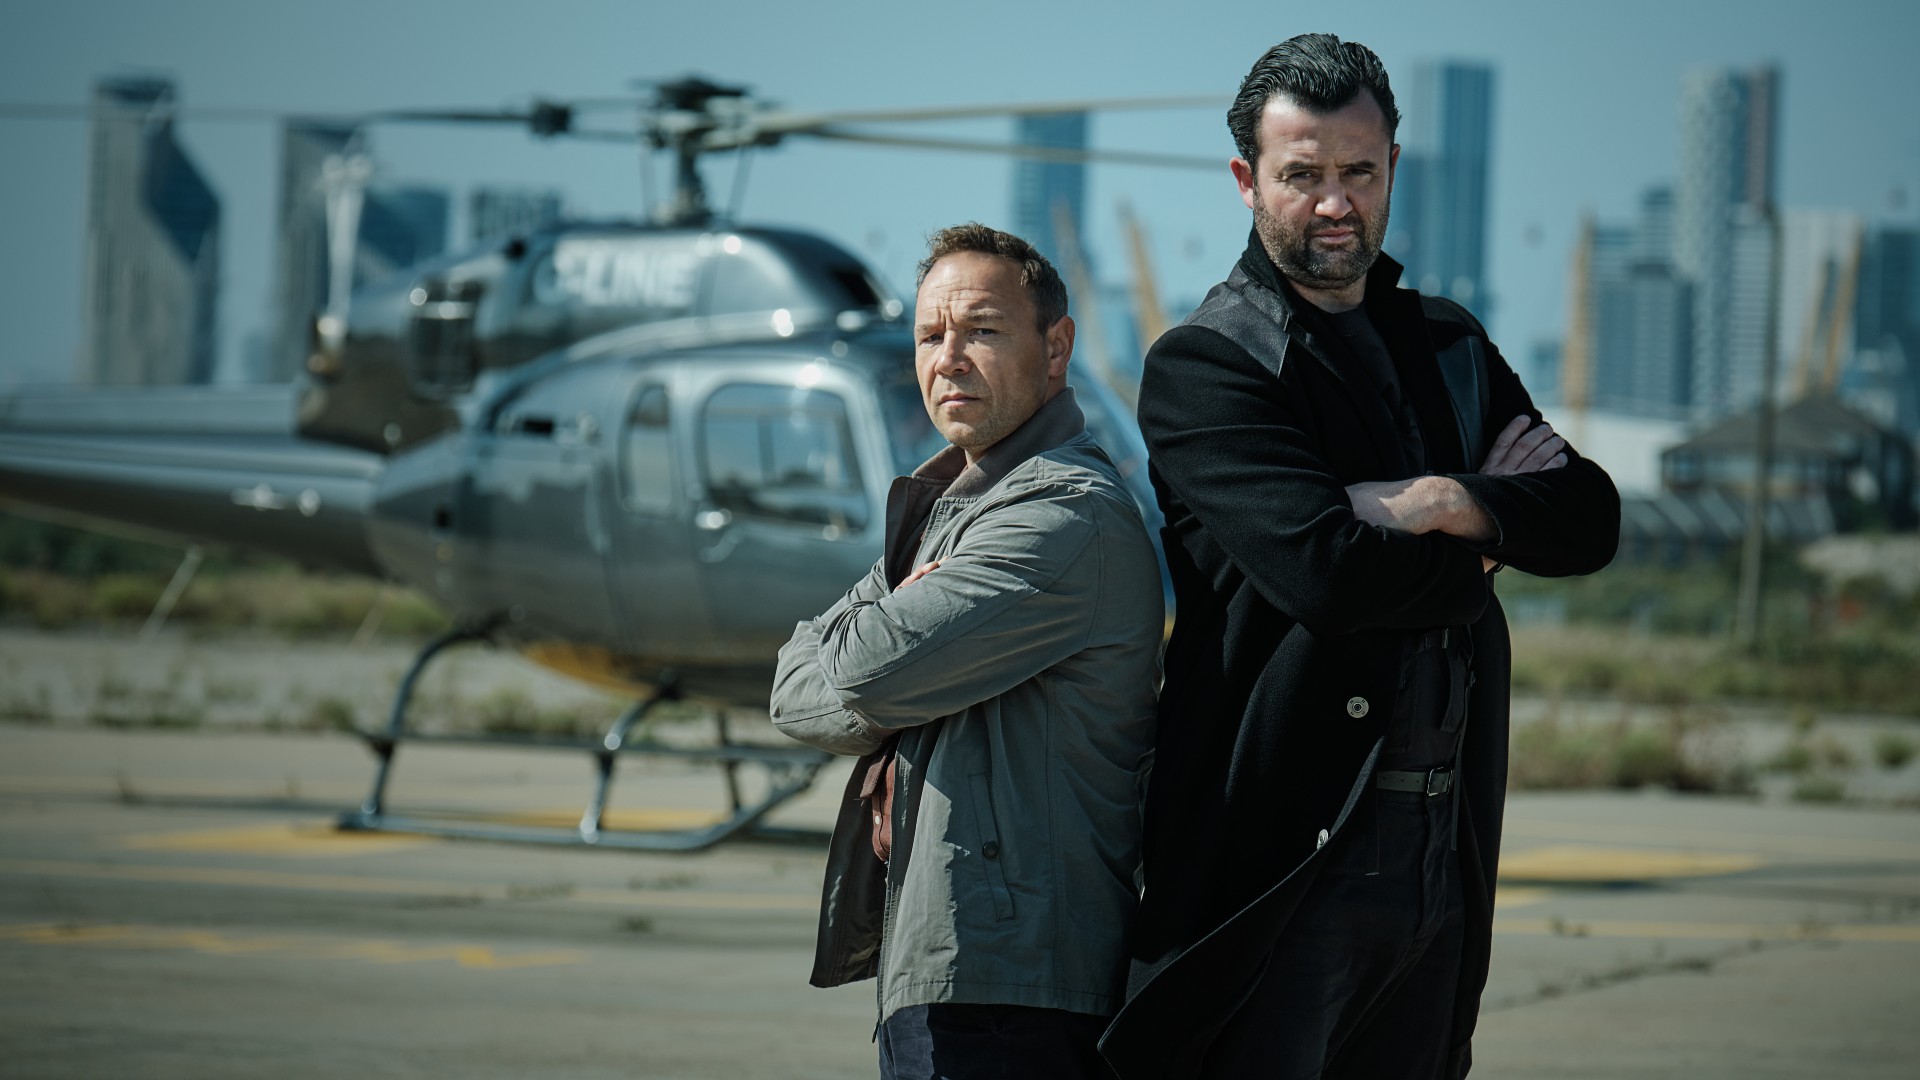 Code 404 Season 2 stars Daniel Mays and Stephen Graham